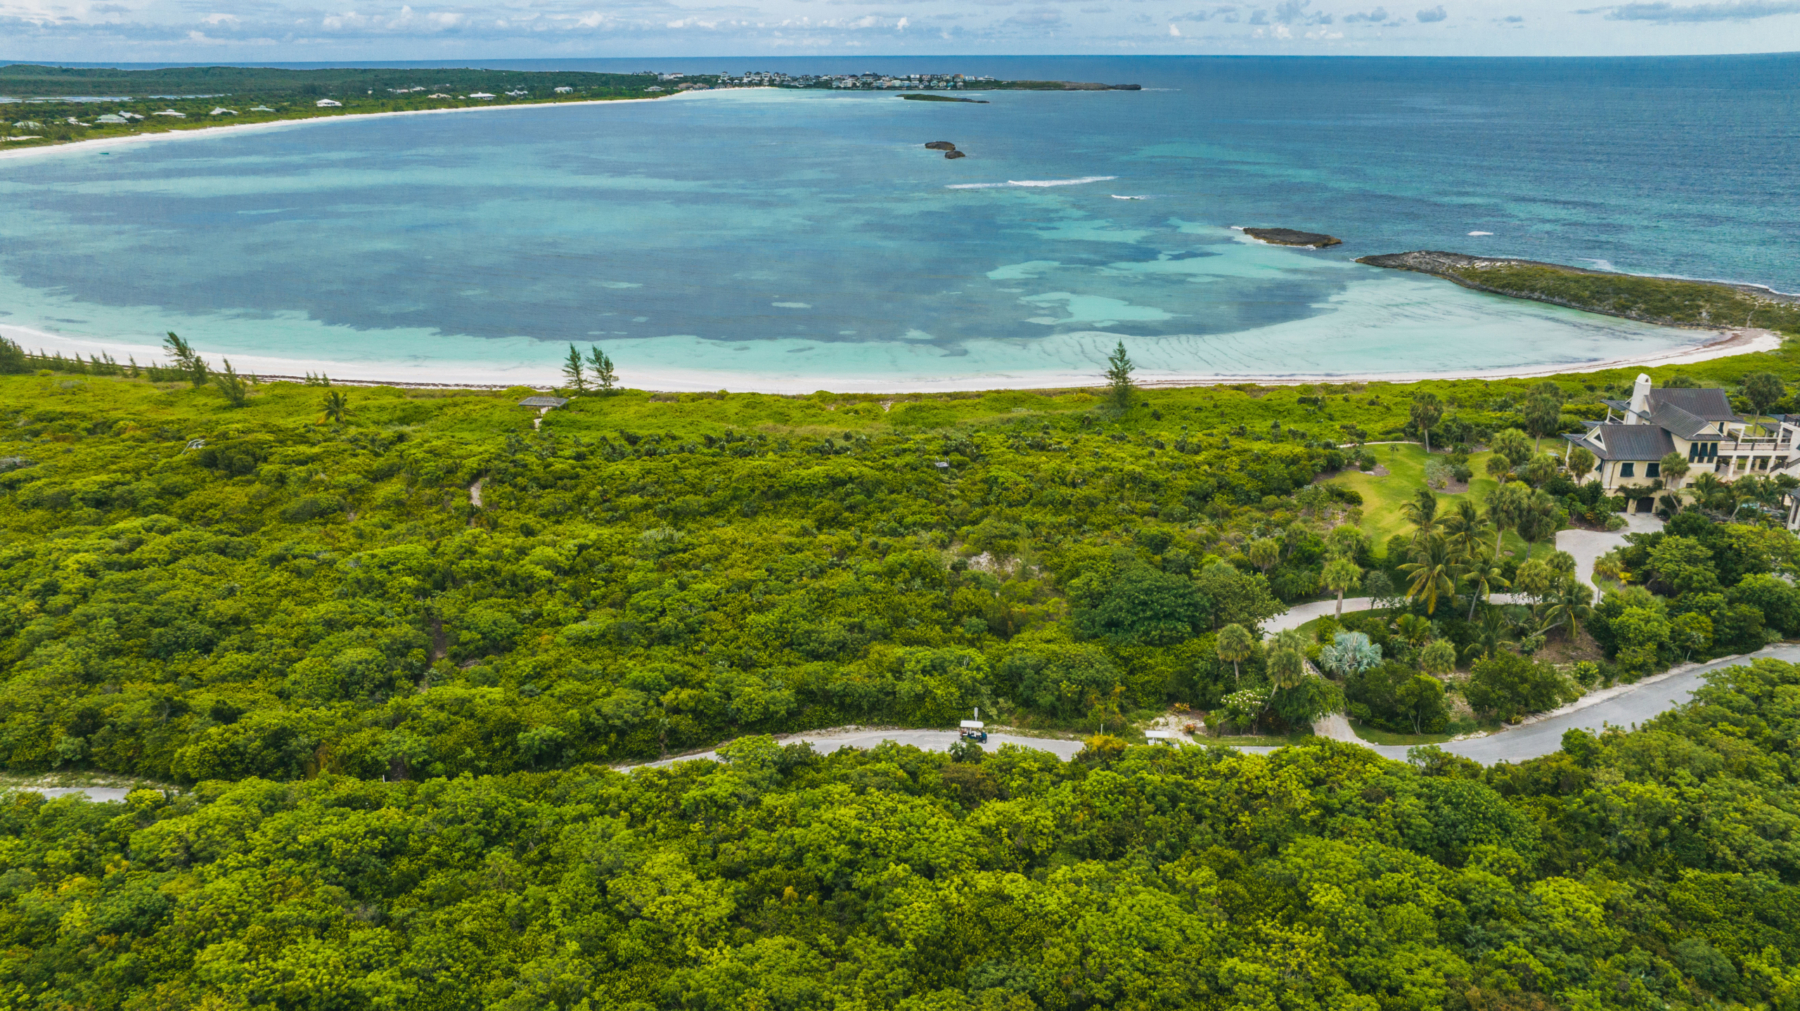 Coastal landscape at The Abaco Club, showcasing lifestyle golf in The Bahamas